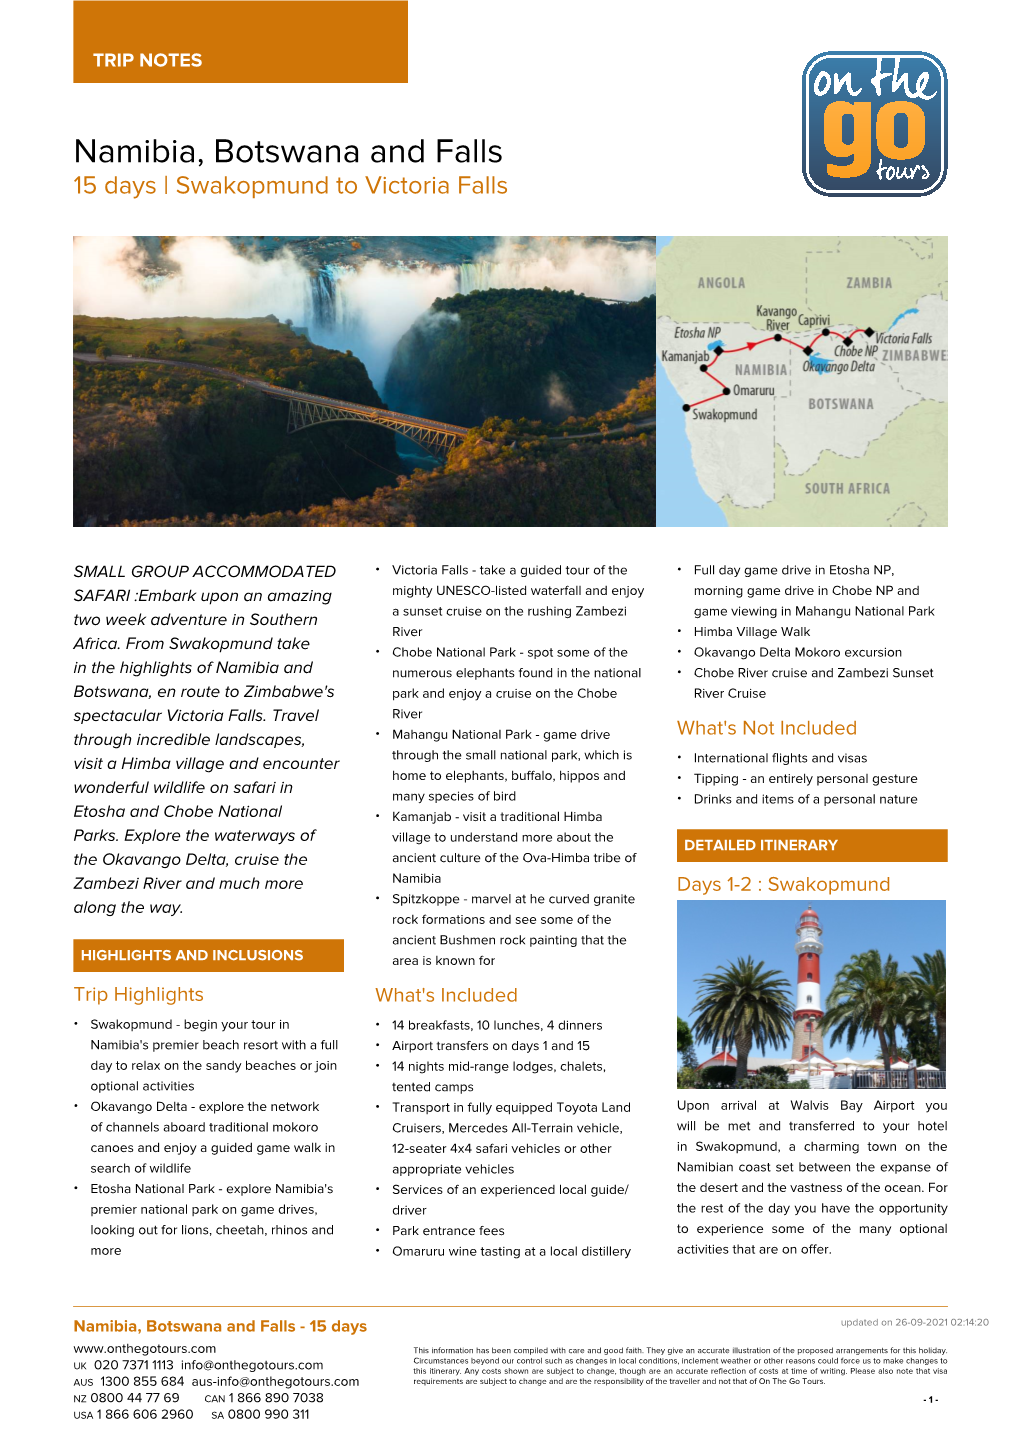 Namibia, Botswana and Falls 15 Days | Swakopmund to Victoria Falls